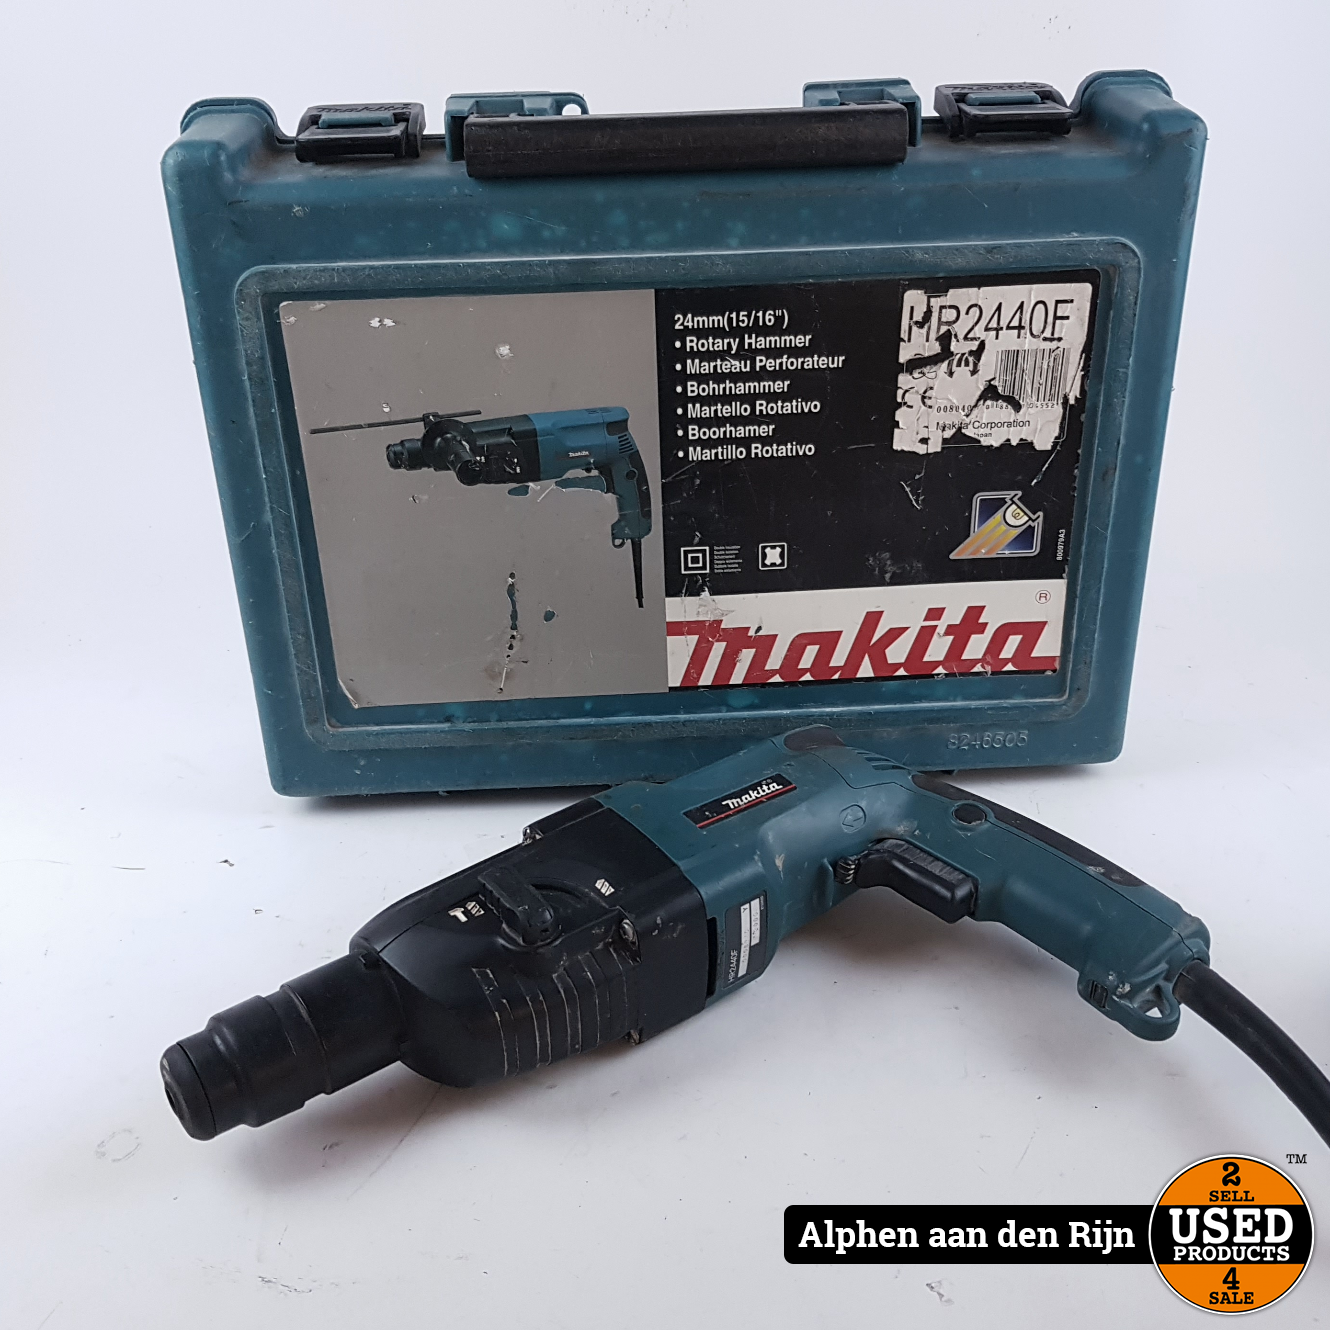 Makita HR2440F in koffer - Products aan den Rijn